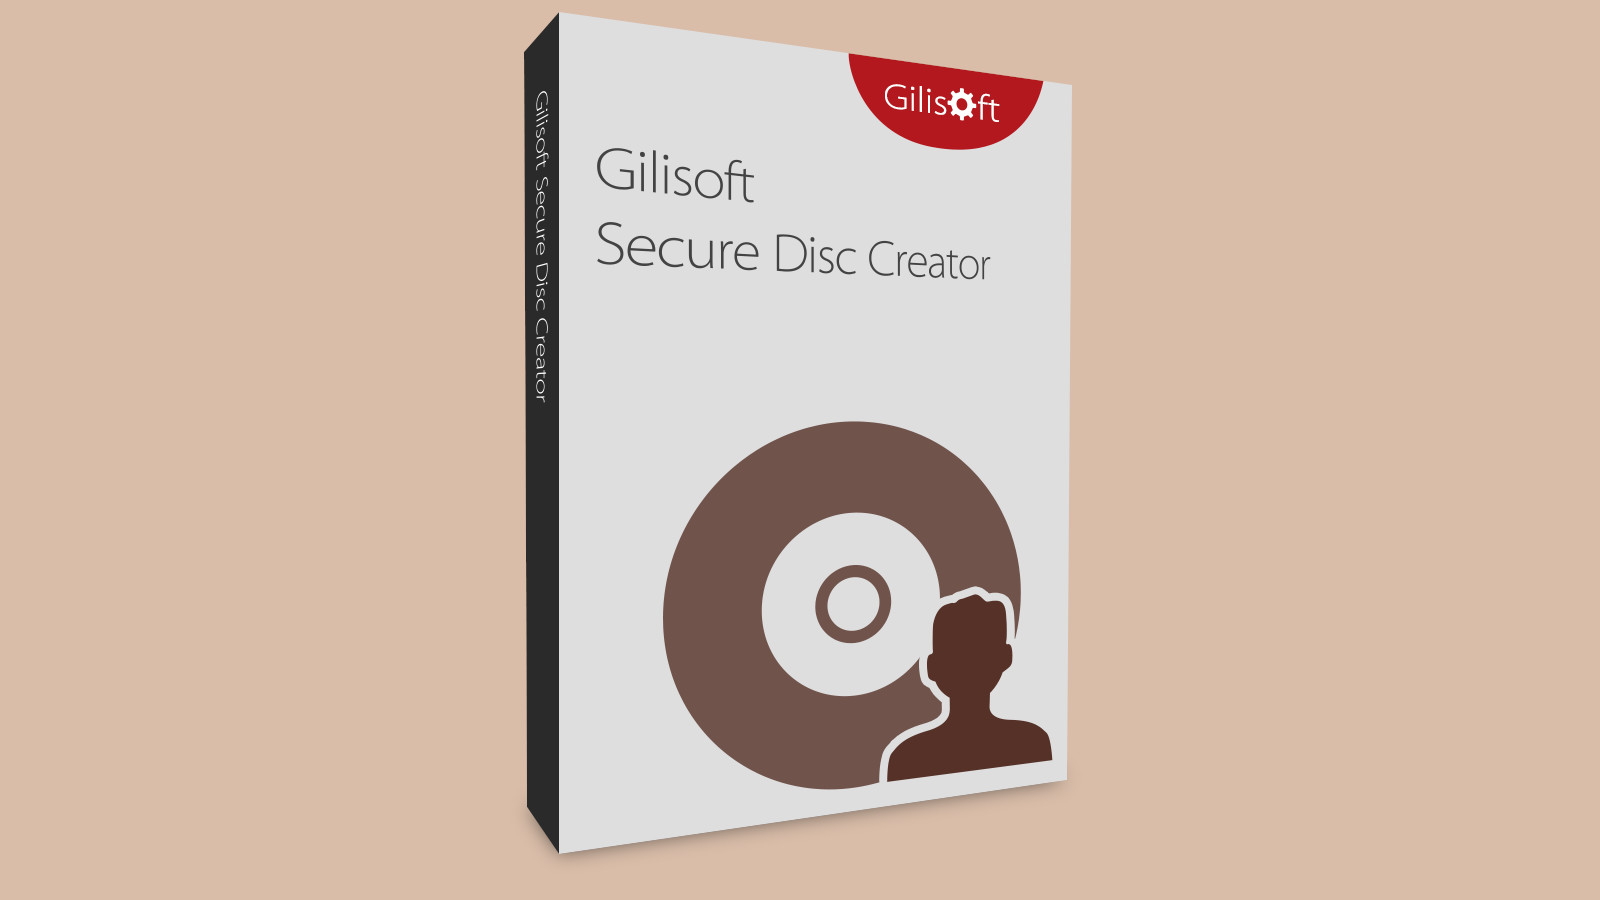 Gilisoft Secure Disc Creator CD Key [$ 6.84]